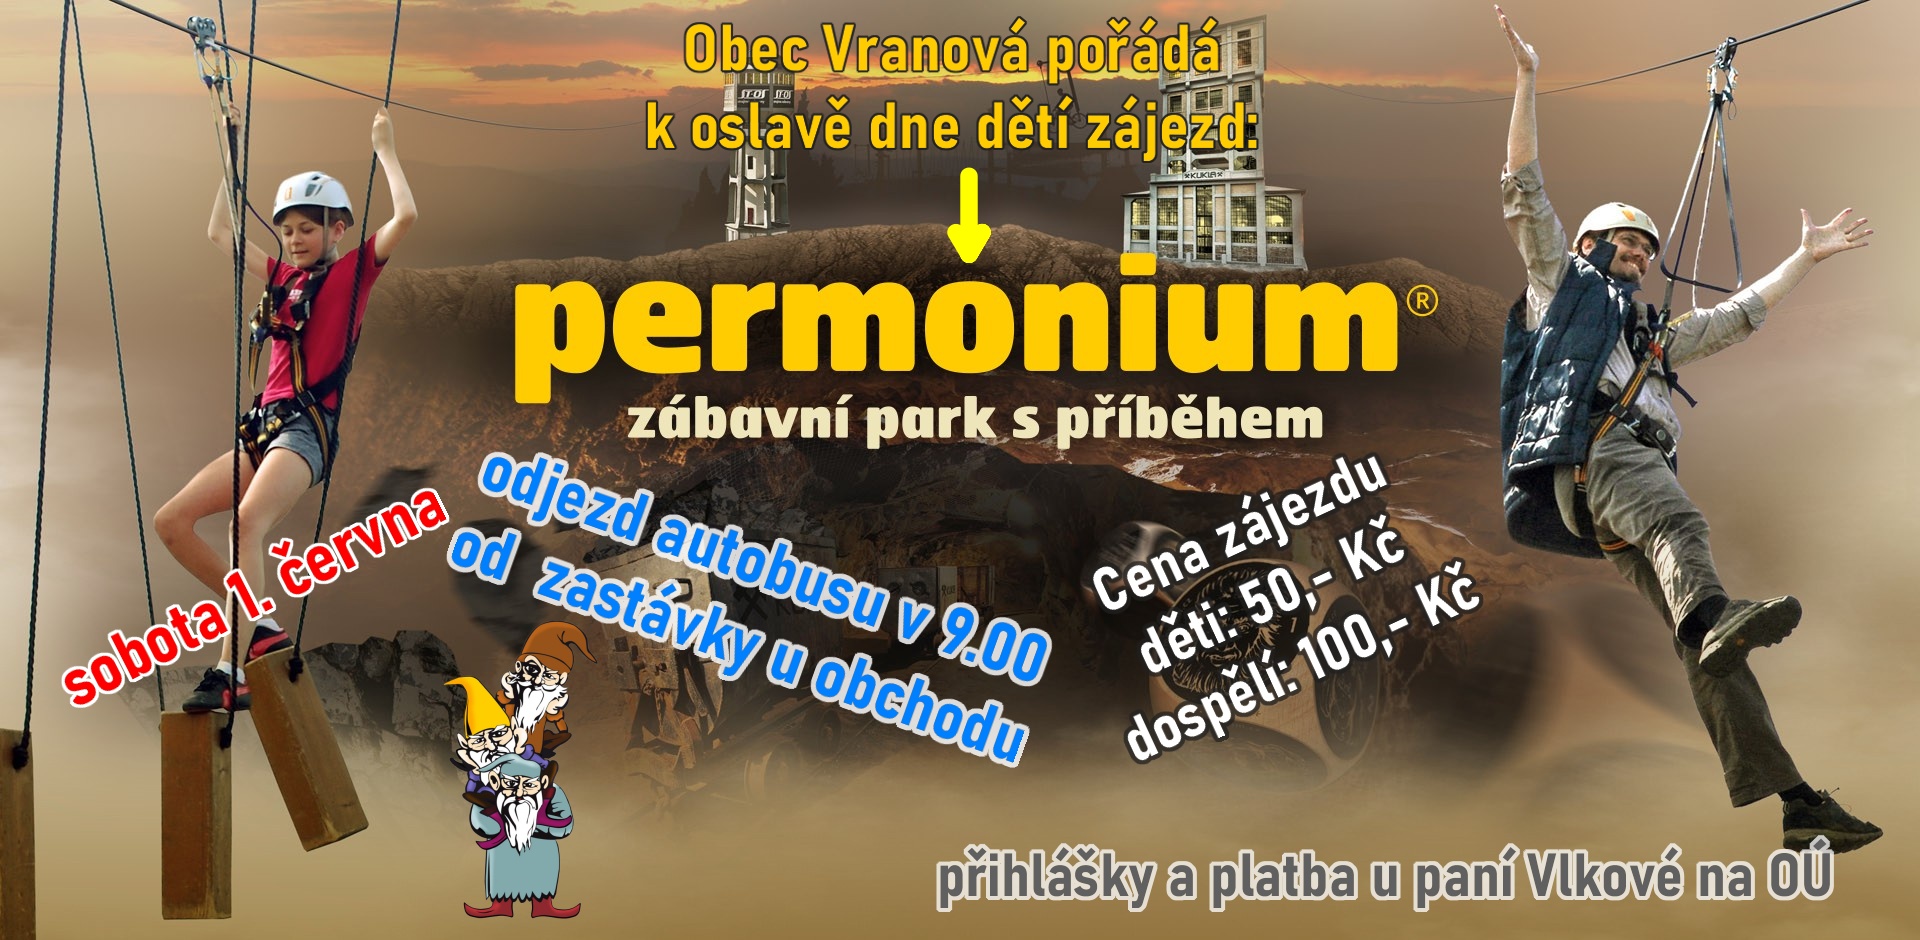 permonium-banner.jpg - 562,03 kB